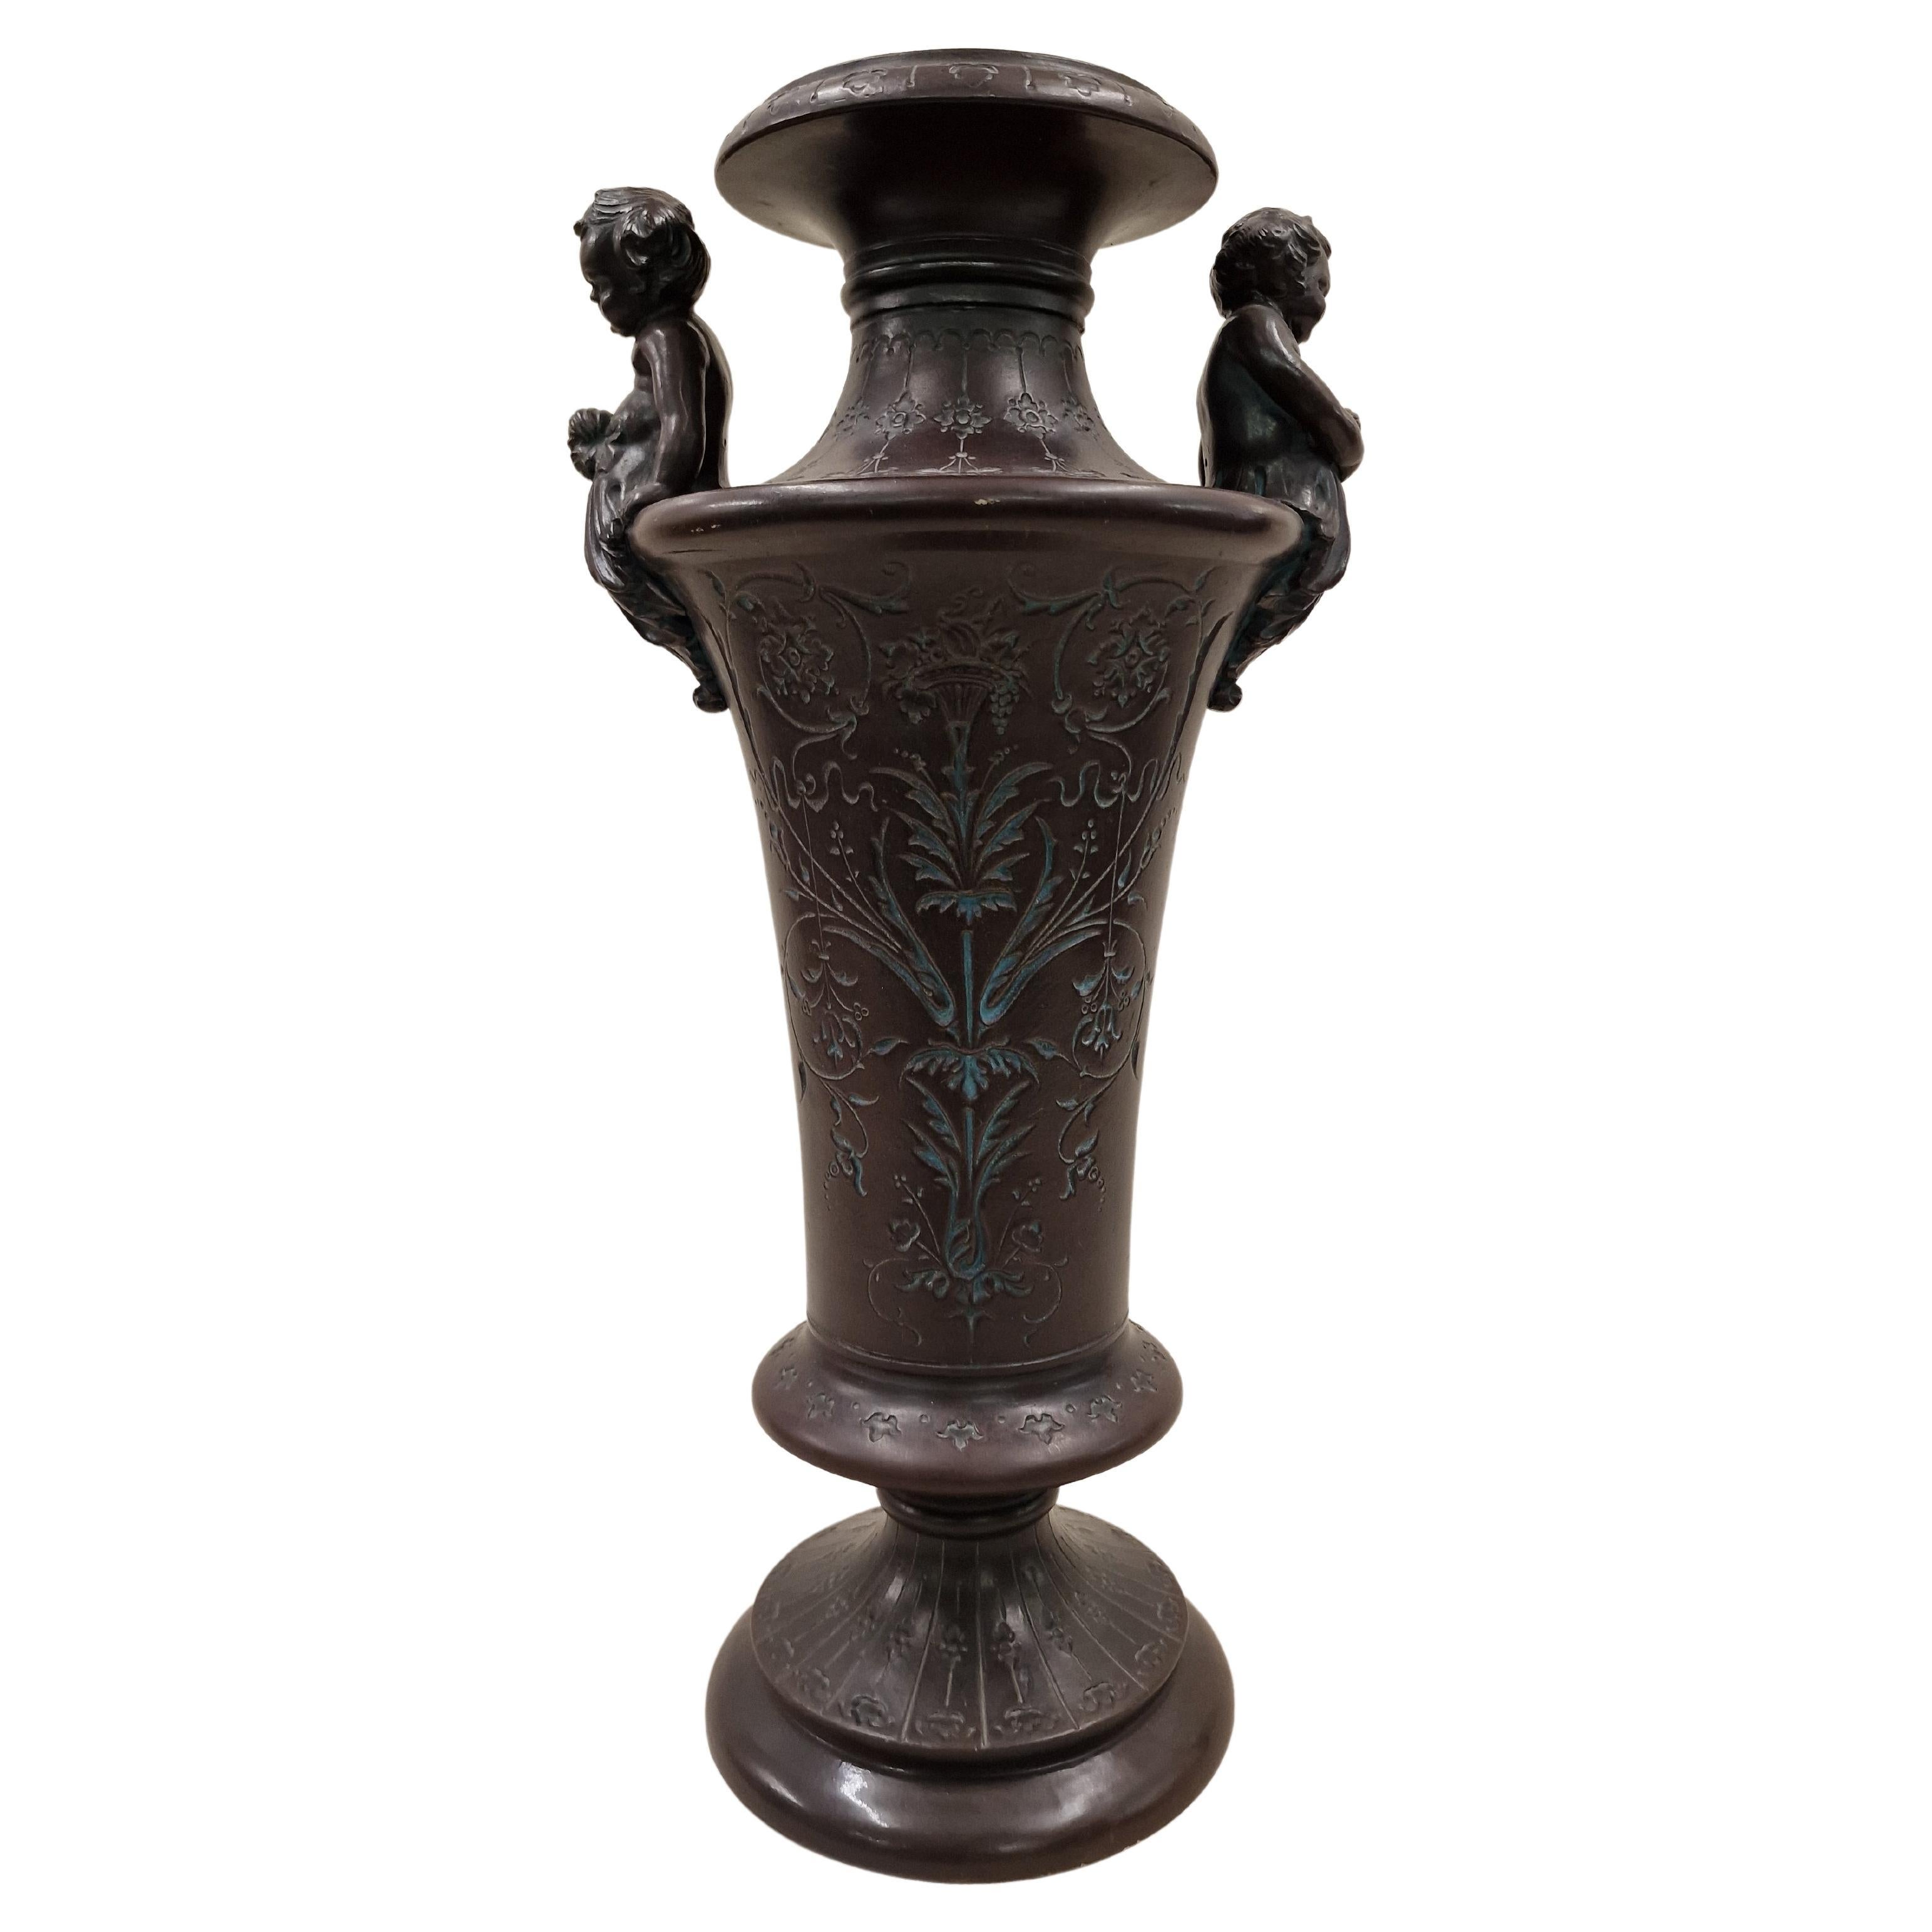 Große Amphore, Vase, Keramik/Majolika, Bernhard Bloch, 1890, Historischismus, Böhmen im Angebot